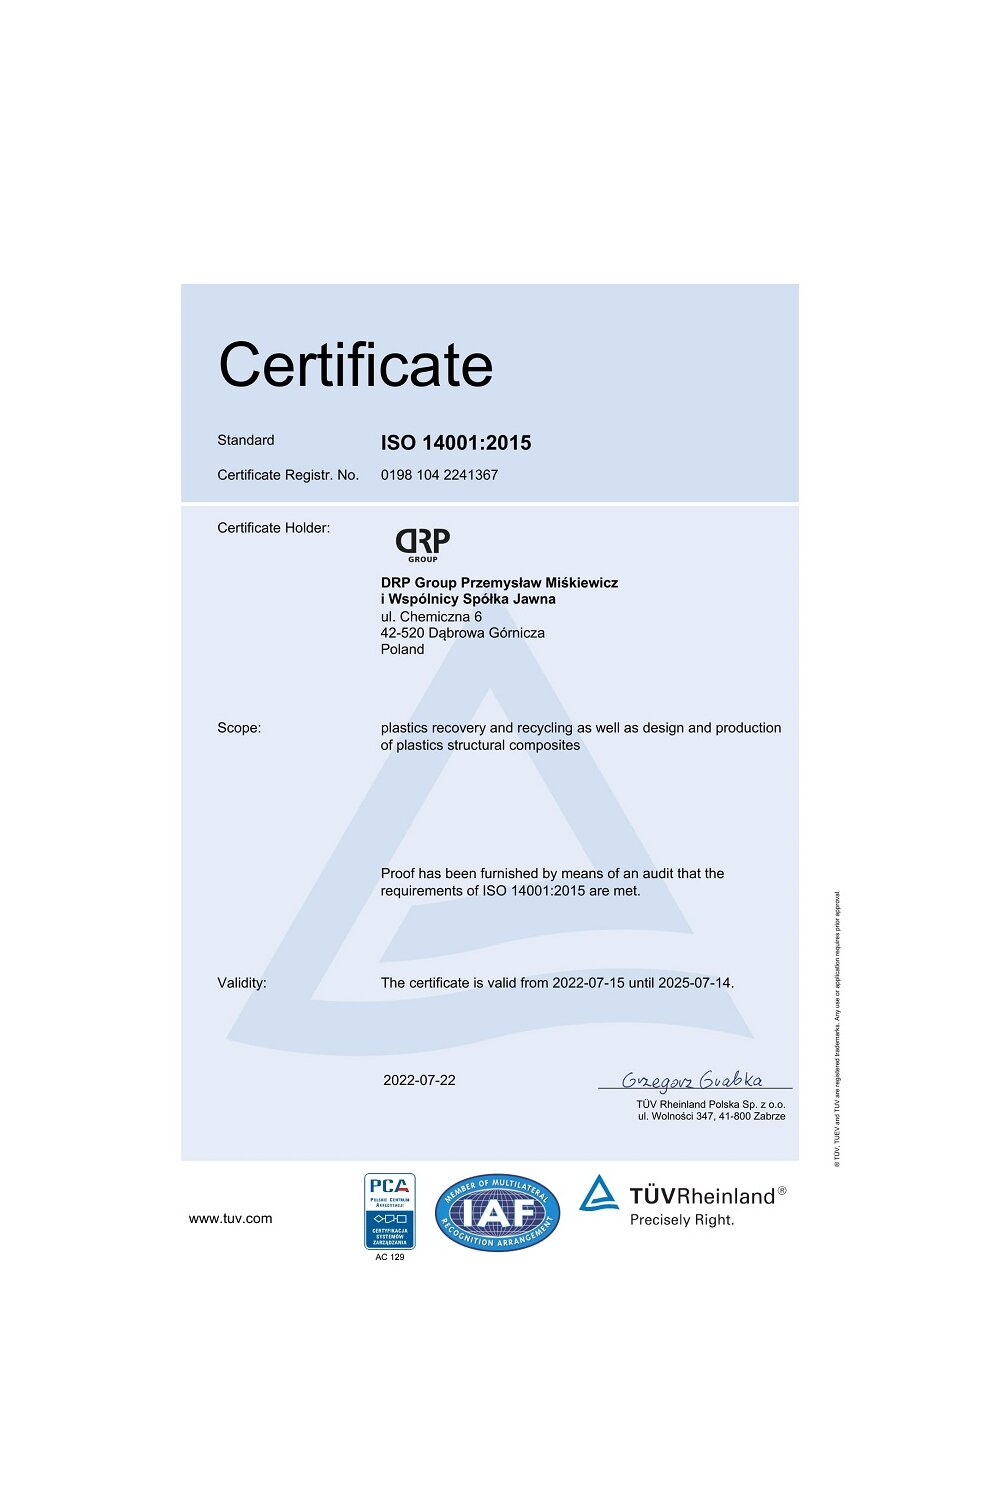 Certyfikat ISO 9001:2015 (EN) - zdjęcie